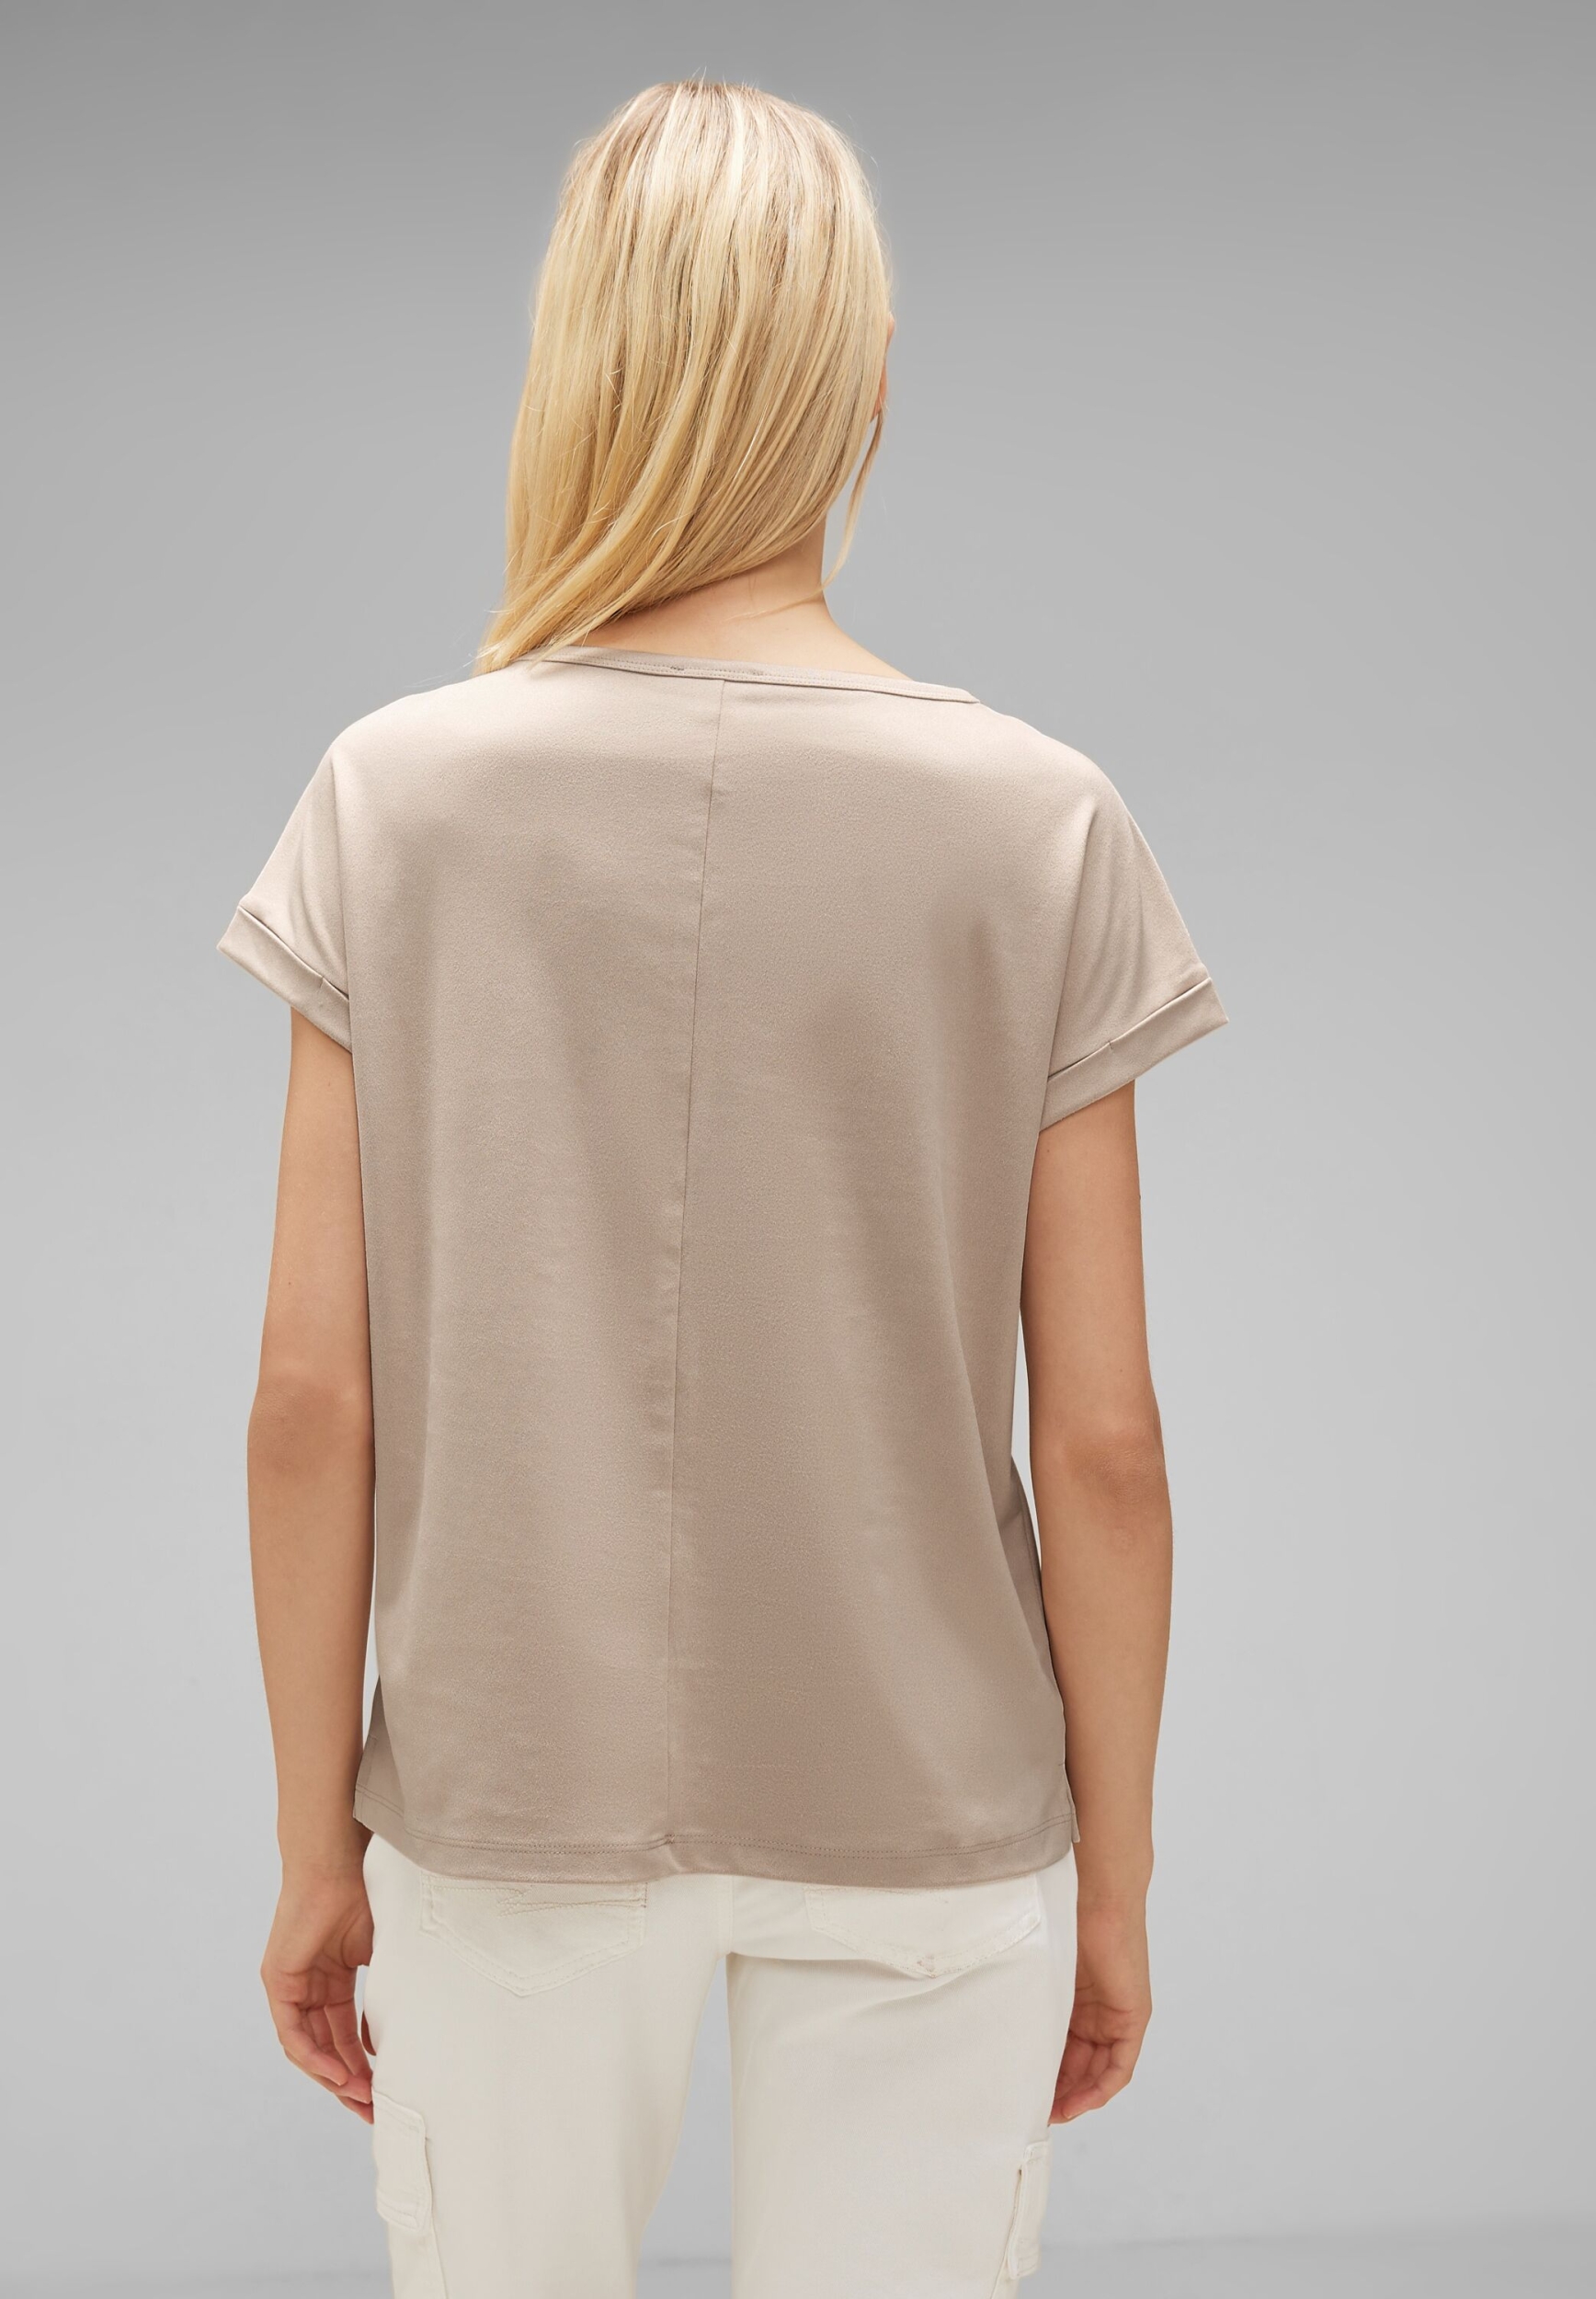 velour shirt | 34 | lucid white | A320431-14451-34